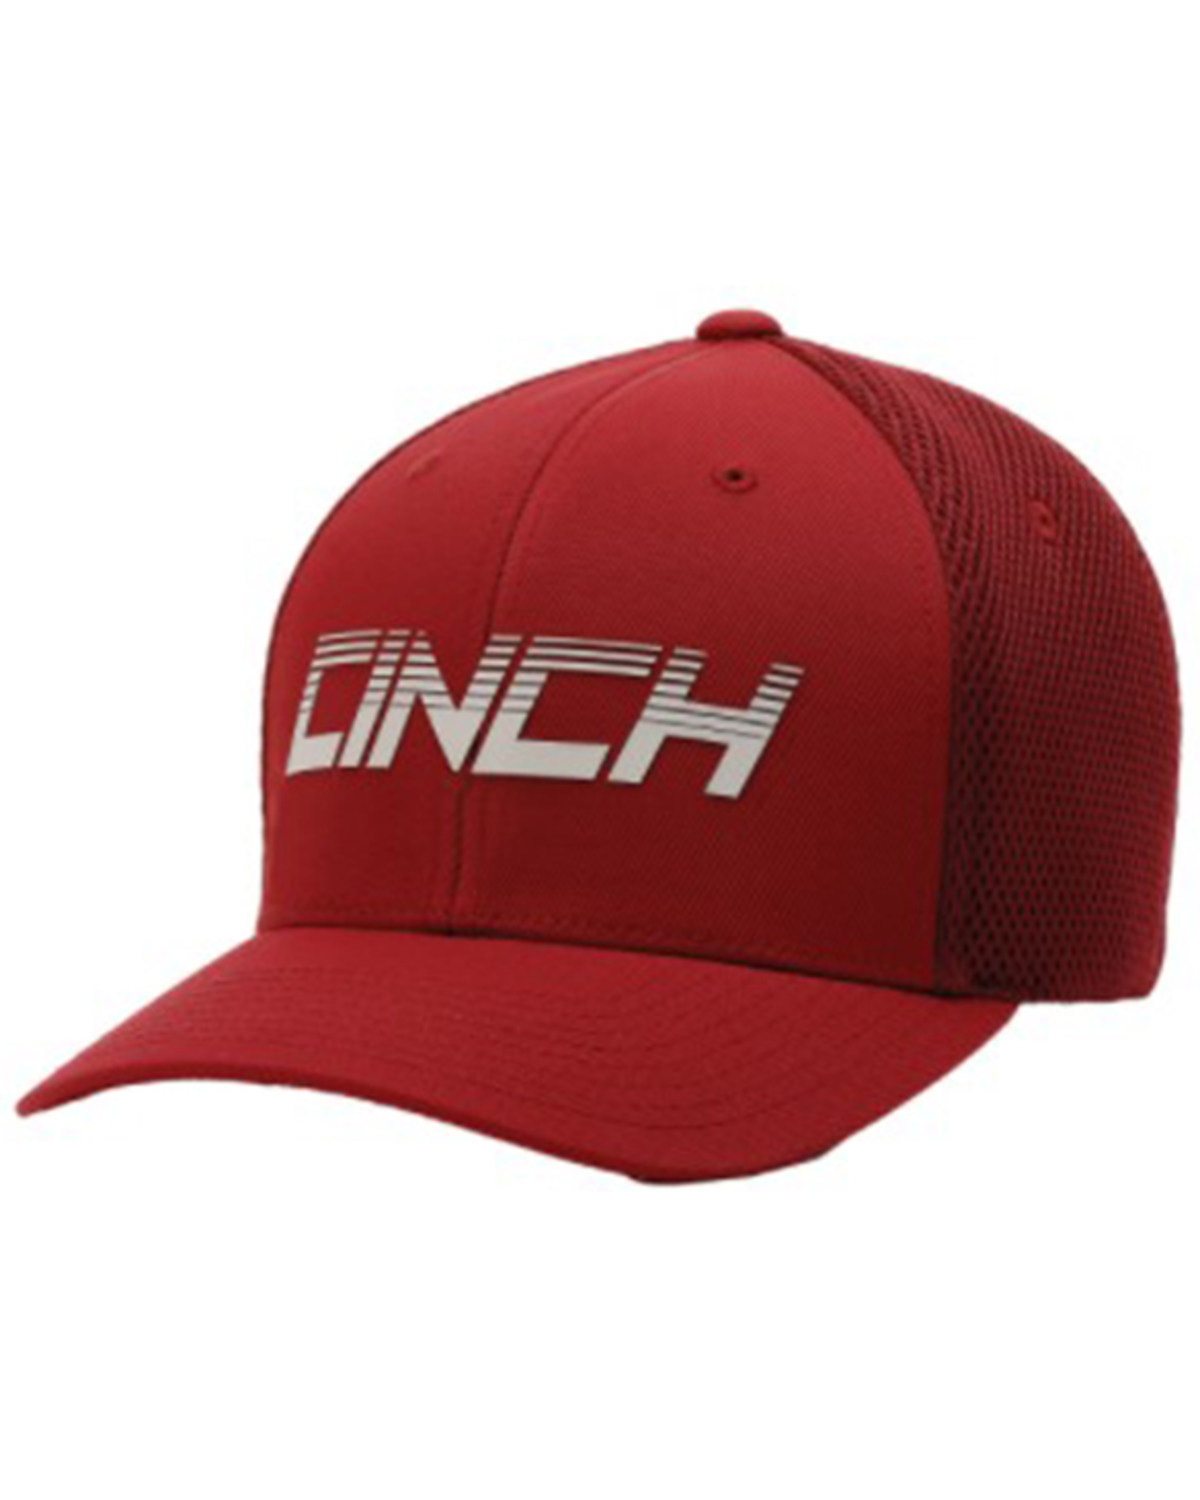 Cinch Men's Logo Ball Cap